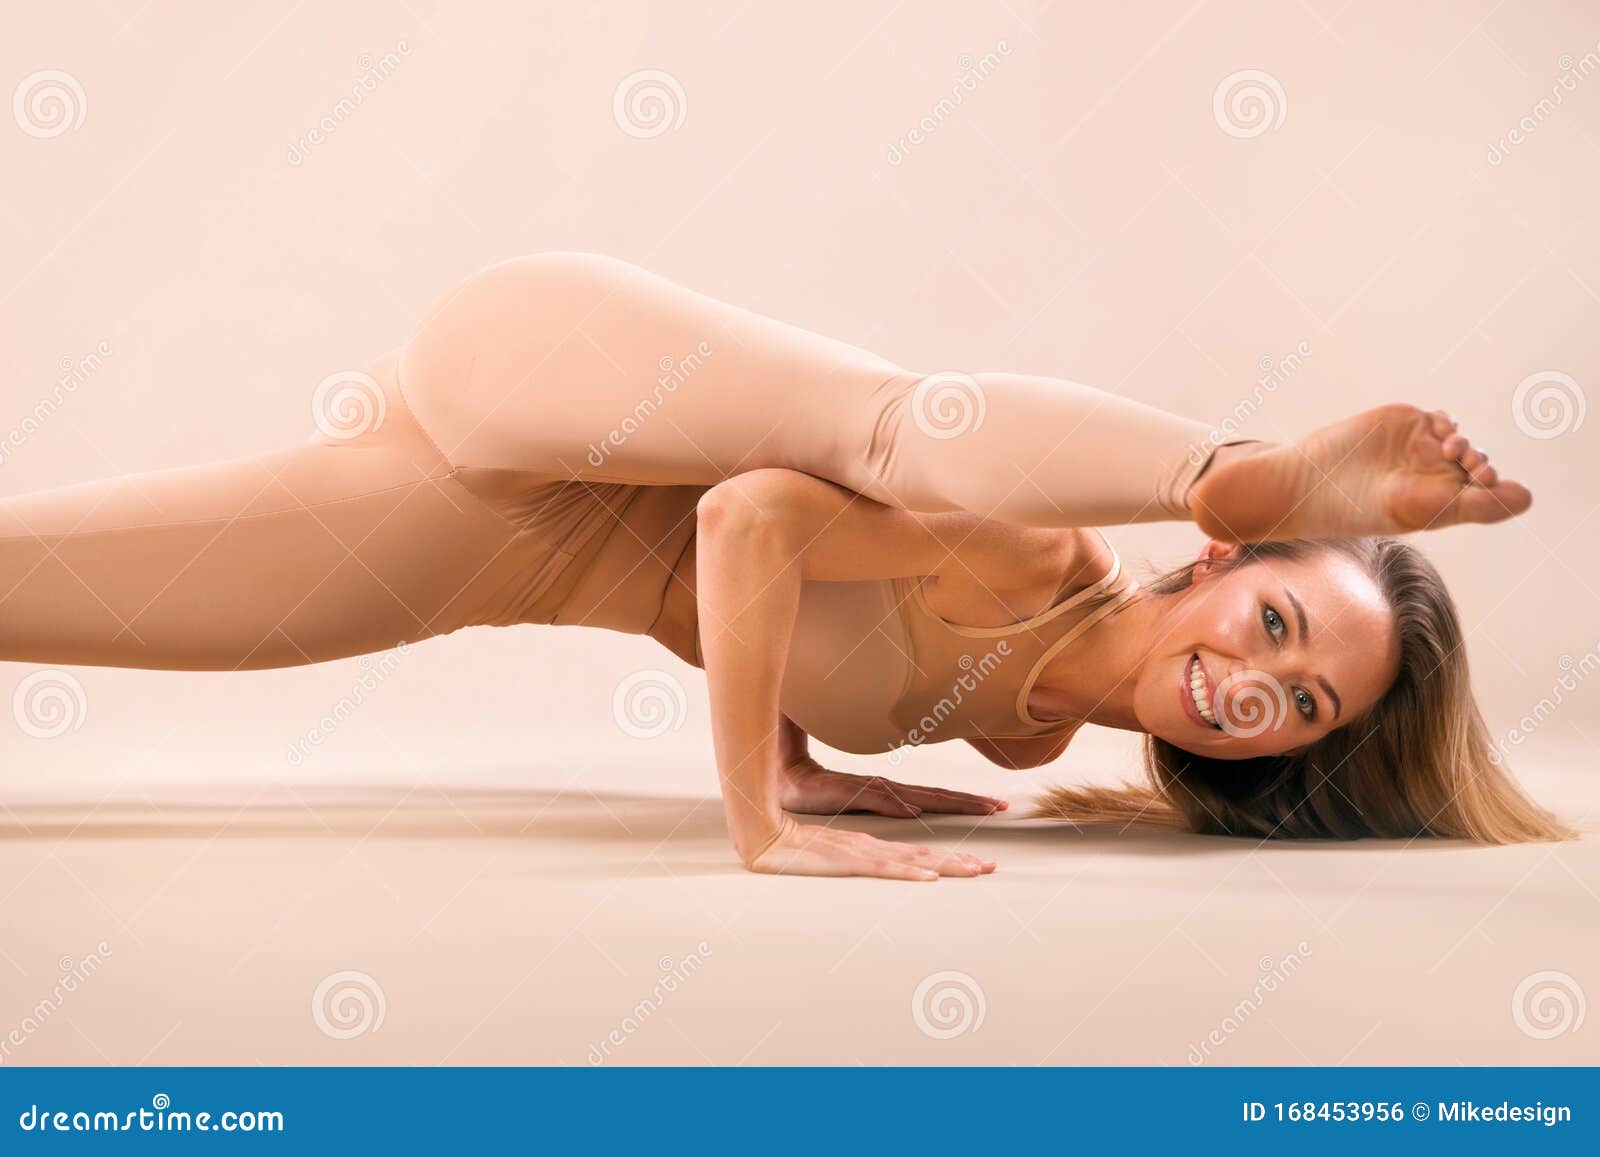 Woman nude pics